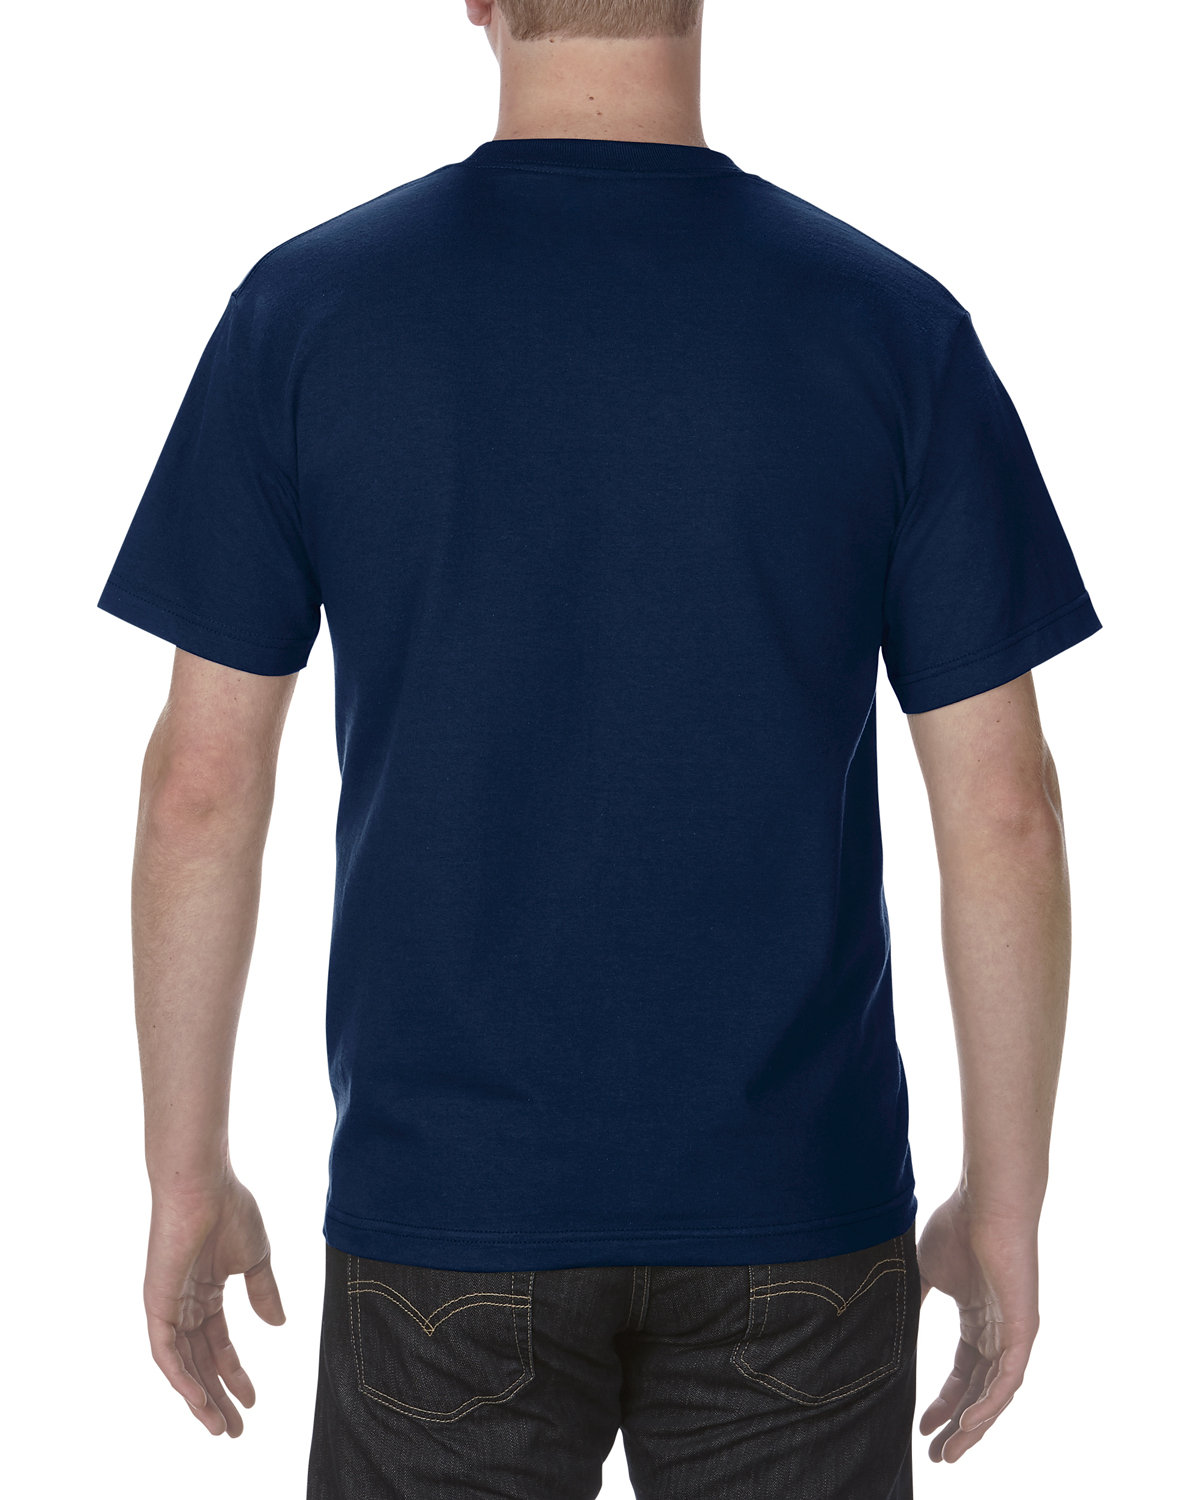 American Apparel Unisex Heavyweight Cotton T-Shirt | alphabroder Canada